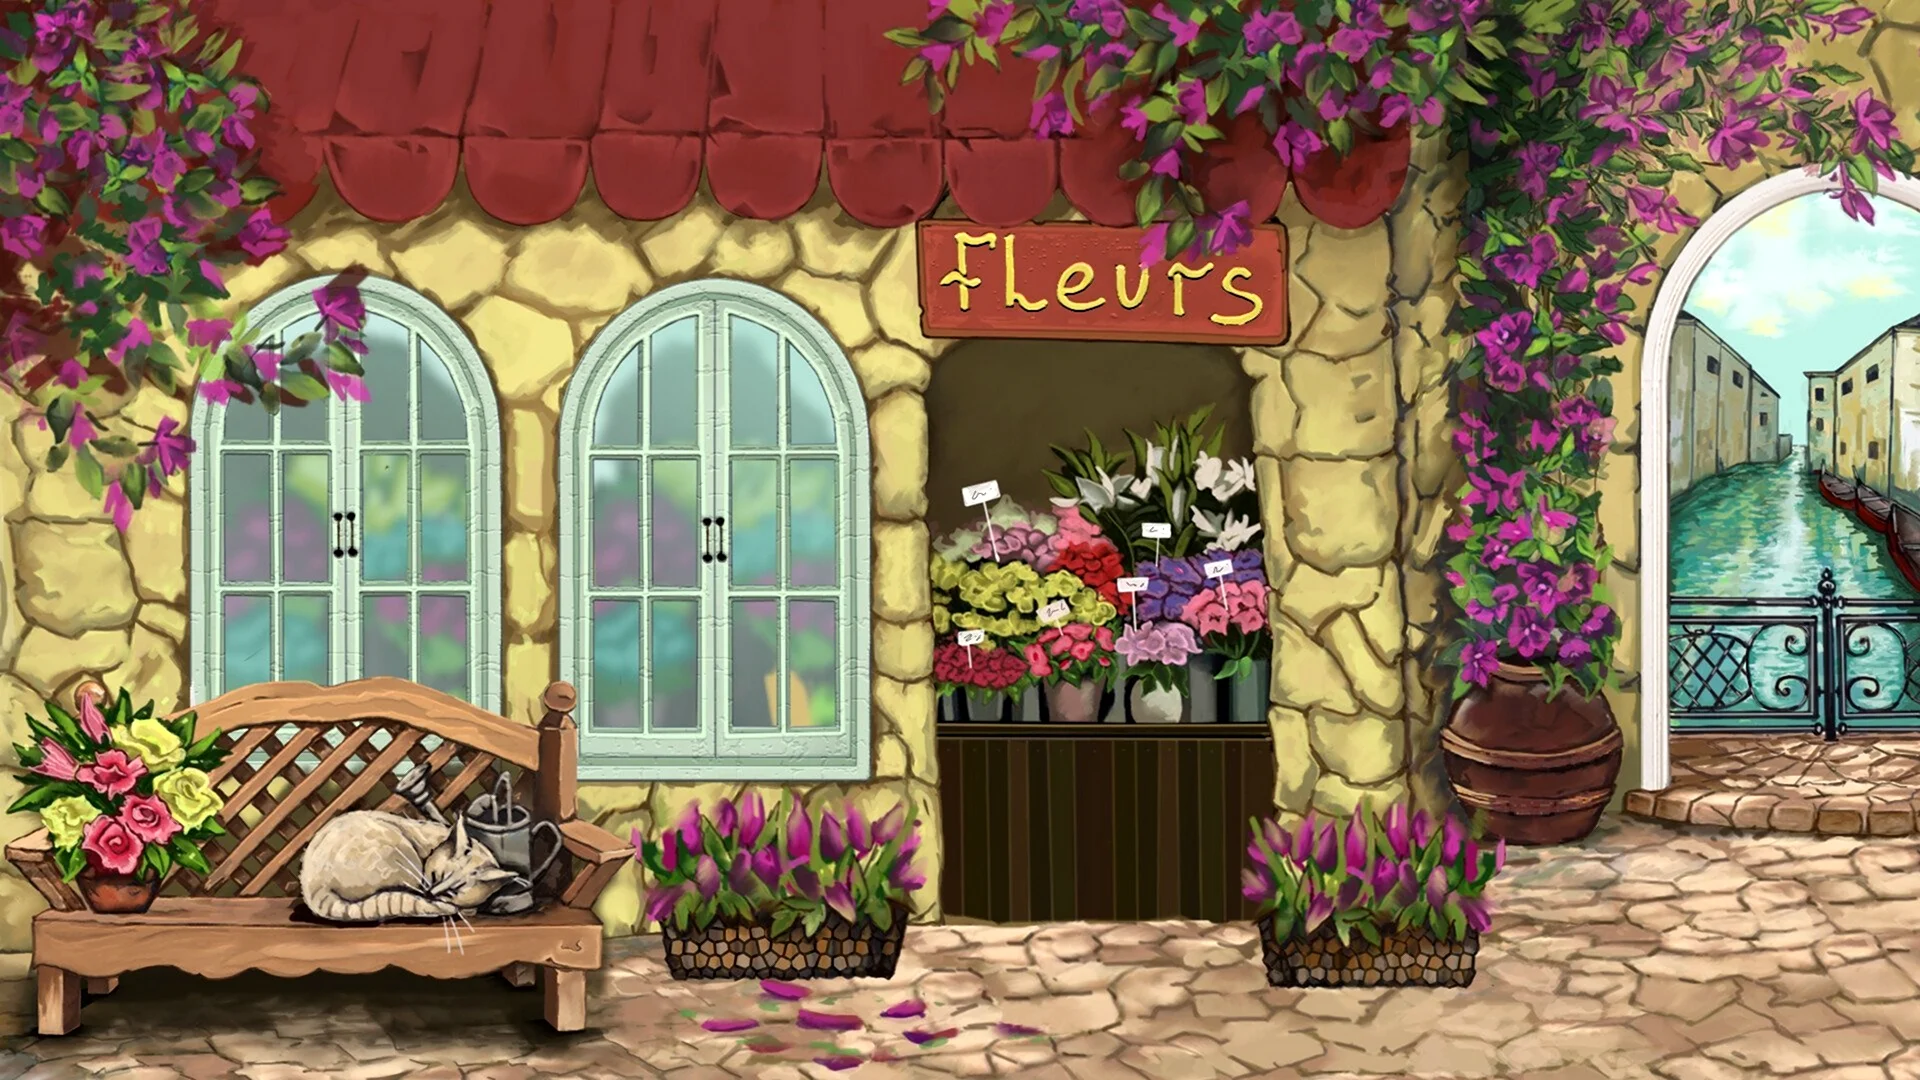 Фон для цветочного магазина